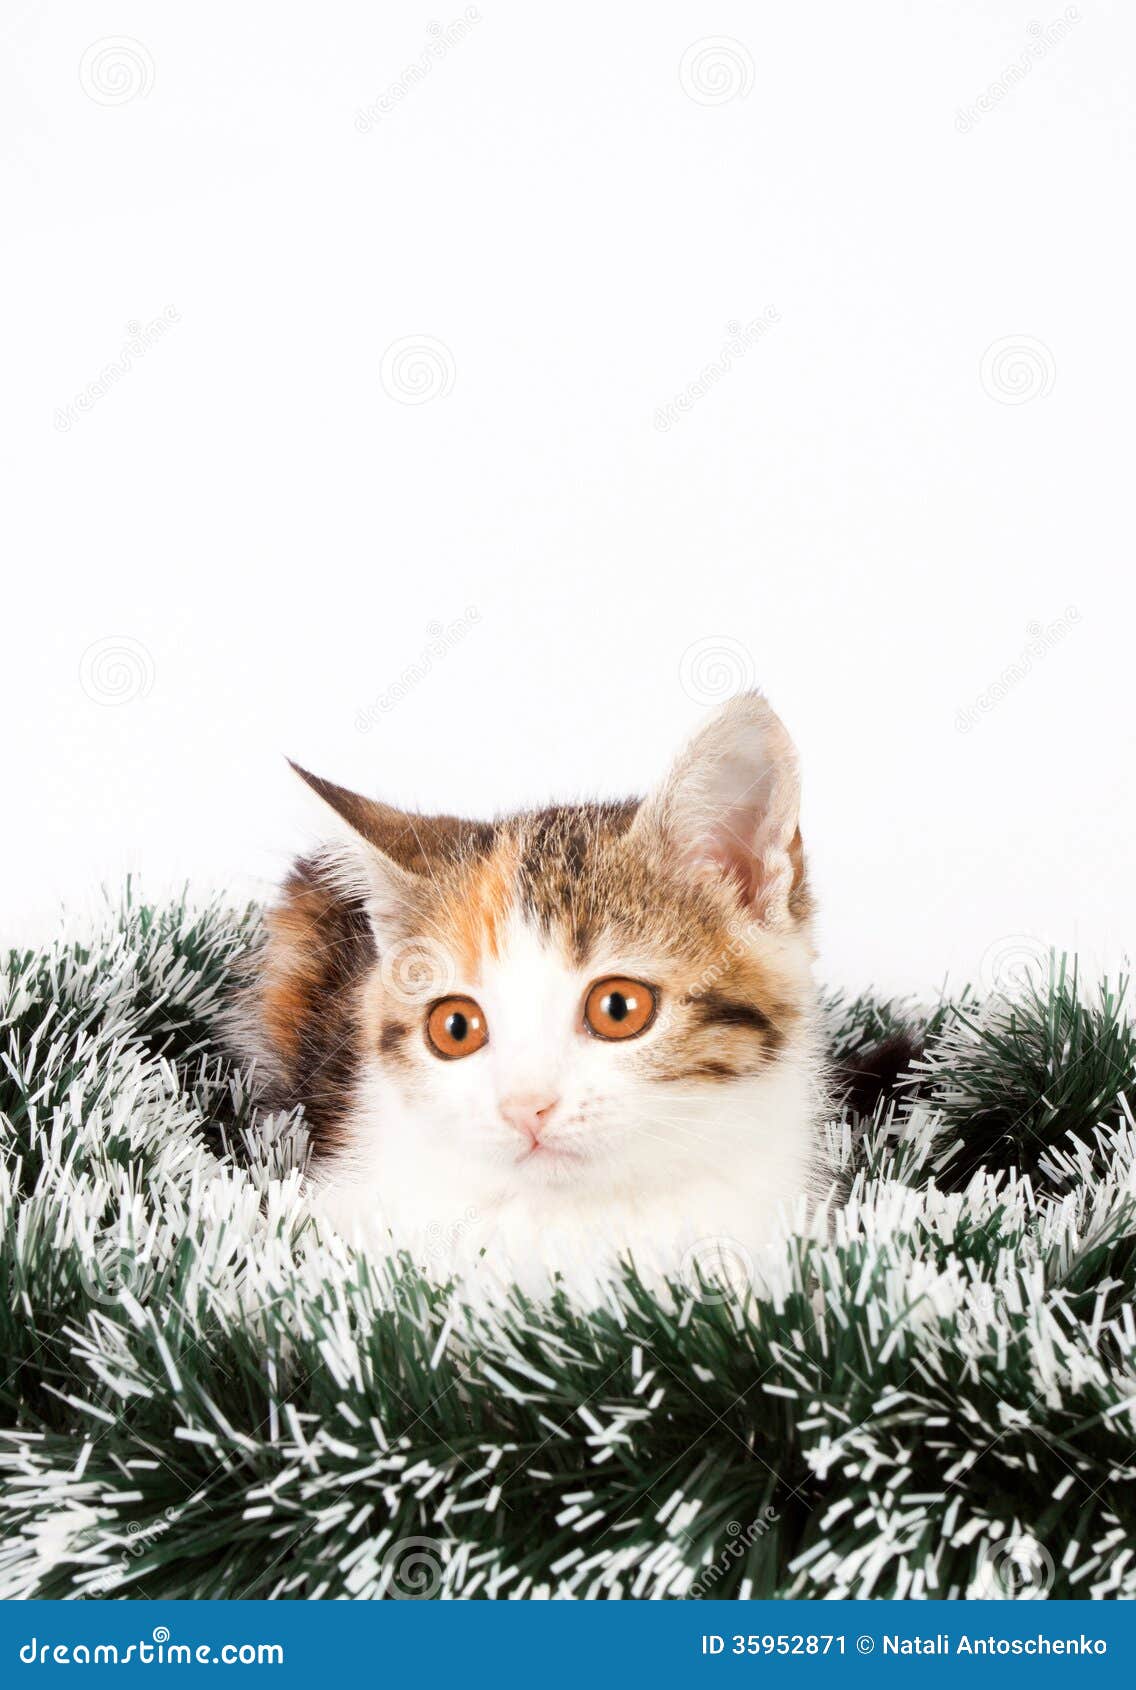 Kerstmis bevlekt katje en klatergoud. Bevlekt katje en Kerstmisdecoratieklatergoud